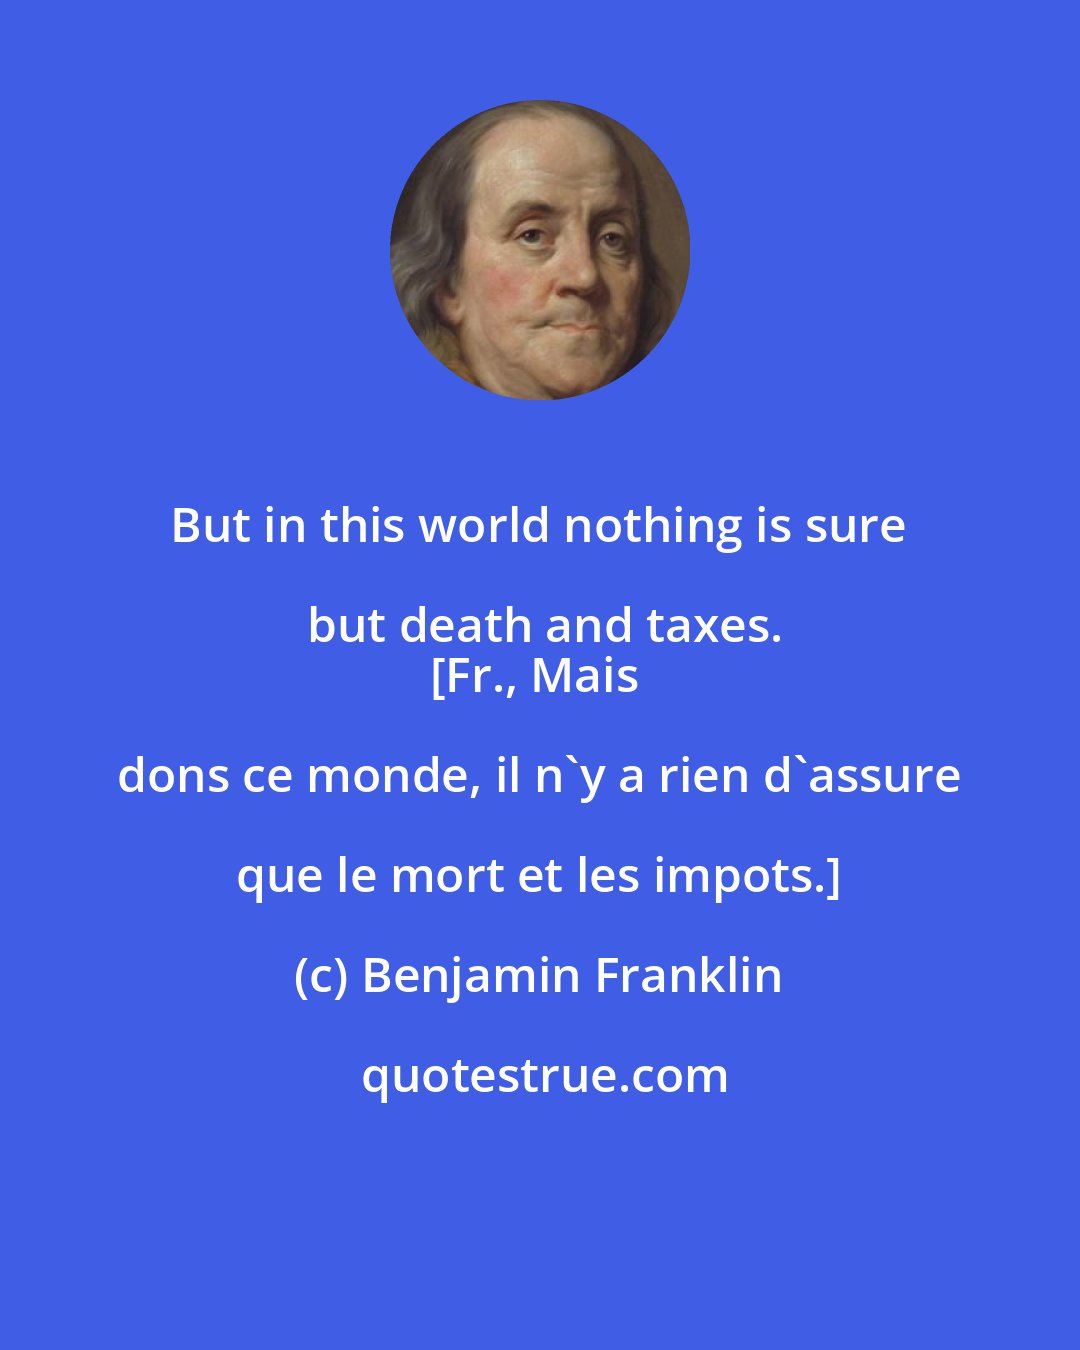 Benjamin Franklin: But in this world nothing is sure but death and taxes.
[Fr., Mais dons ce monde, il n'y a rien d'assure que le mort et les impots.]